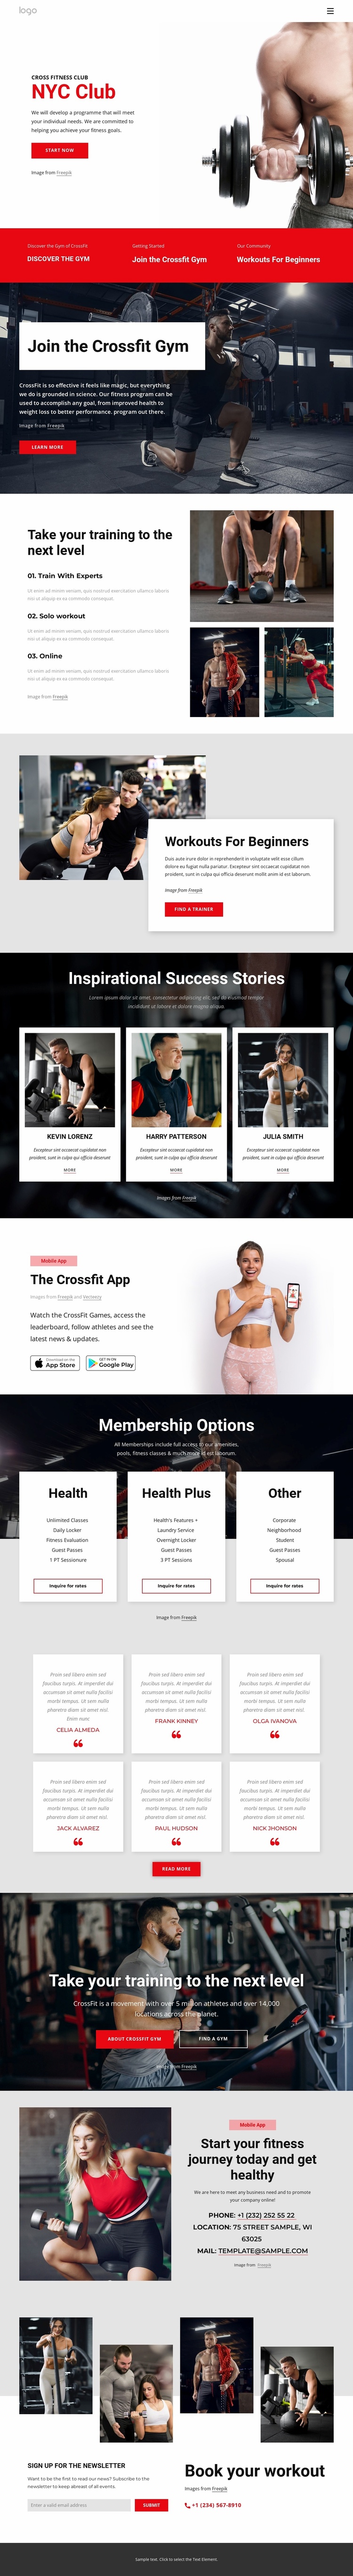 Cross fitness club Landing Page